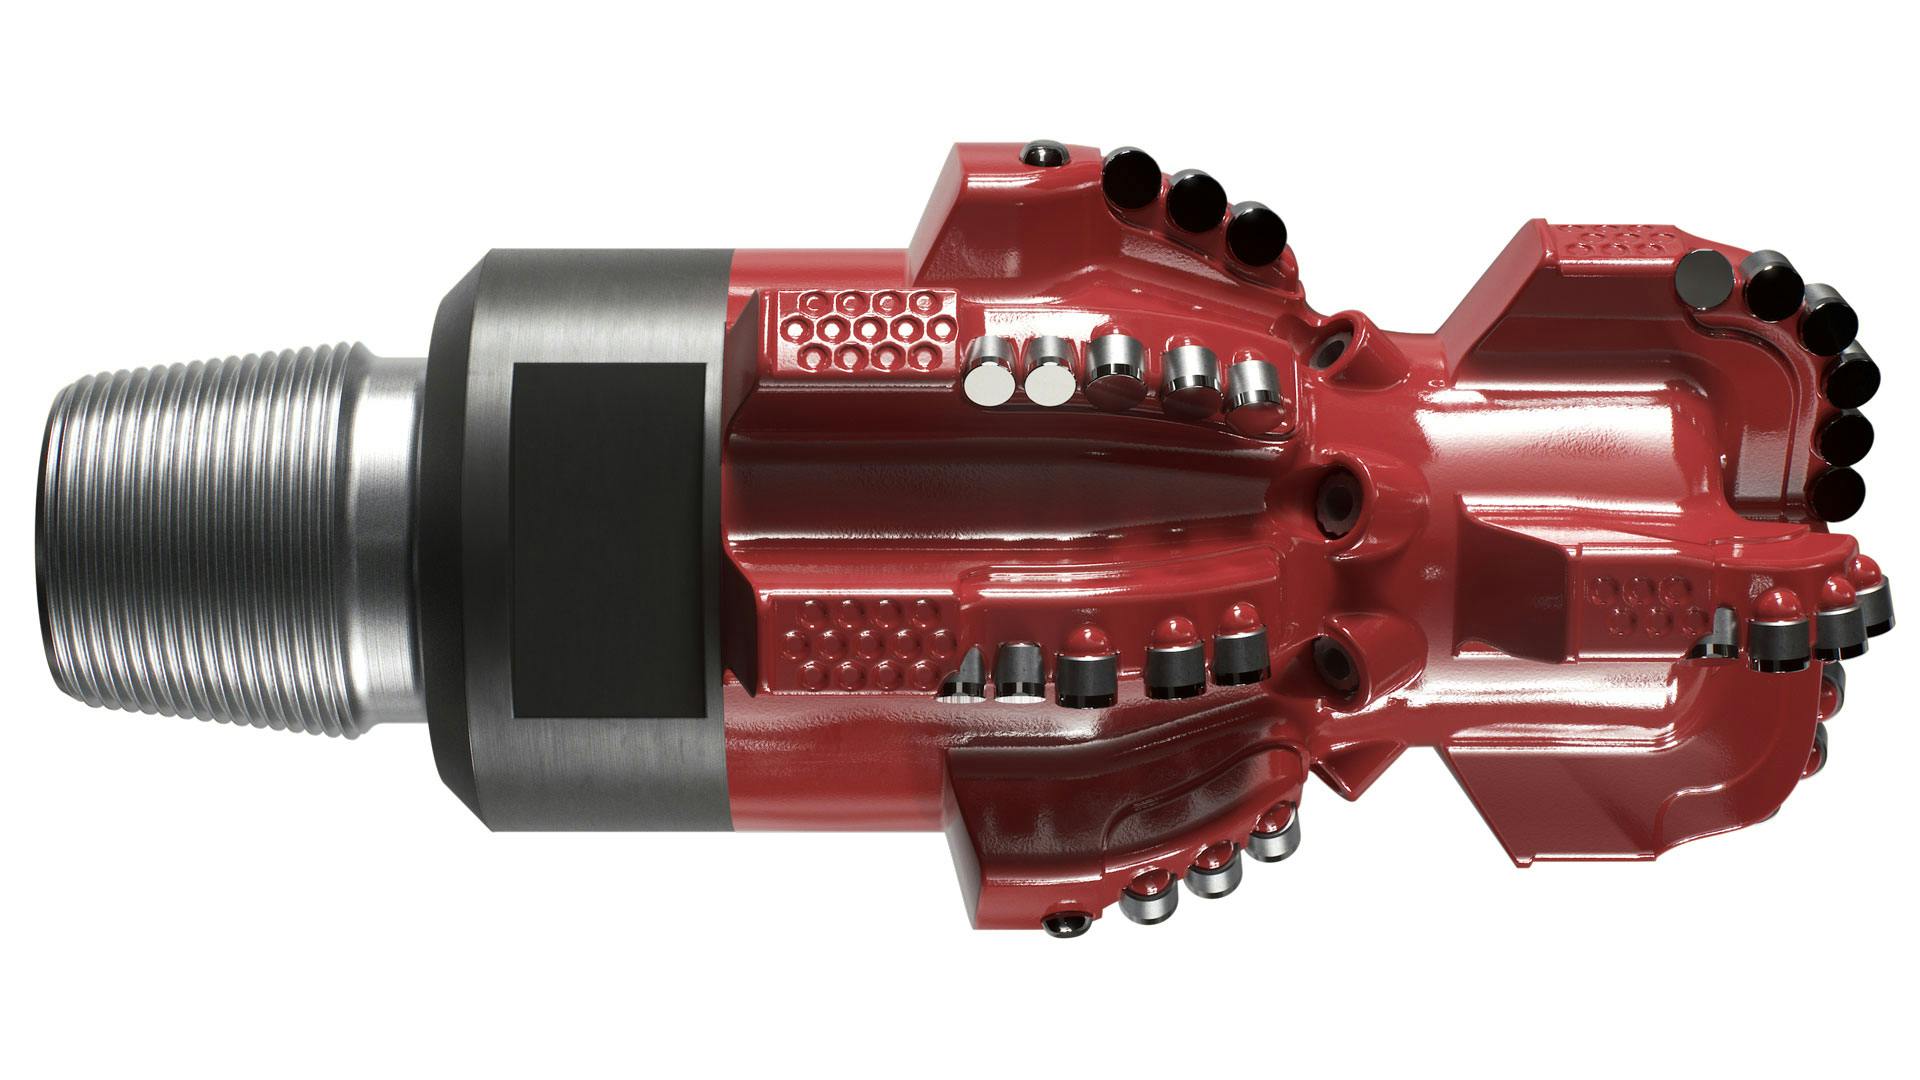 Bottom view render of a Tektonic Bi-Center Drill Bit